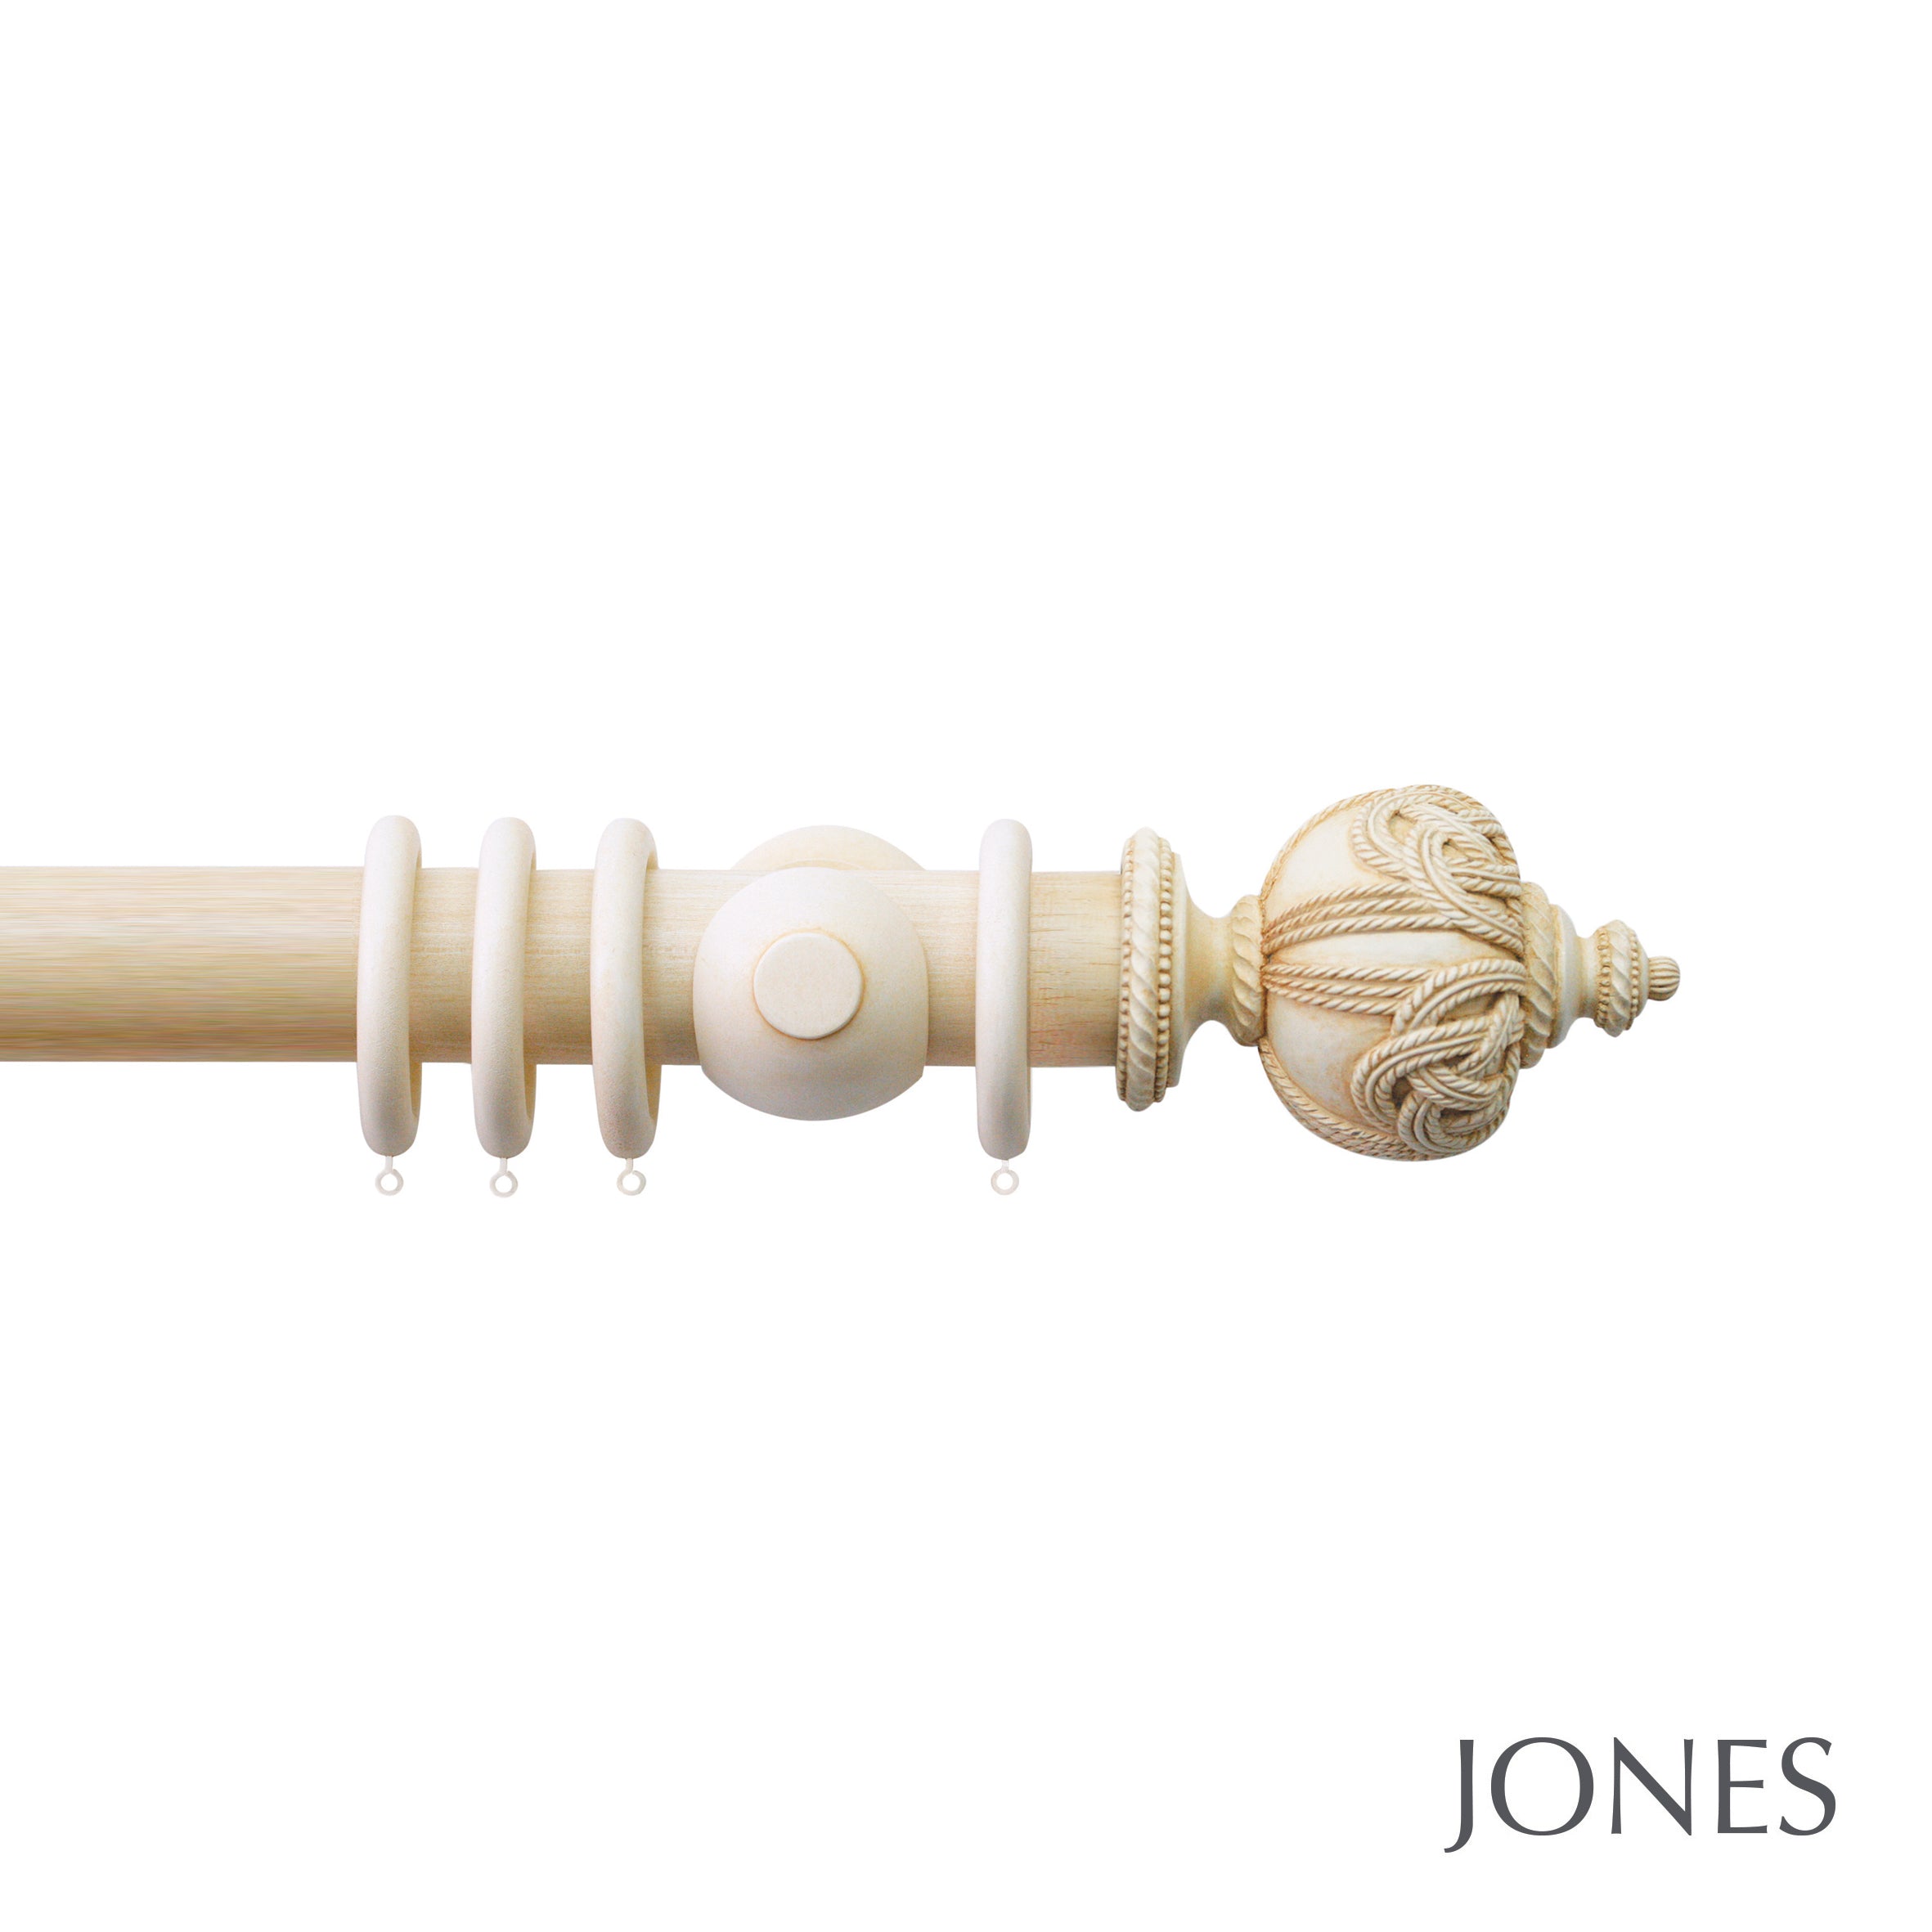 Jones Interiors Grande Rope Finial Curtain Pole Set in ivory